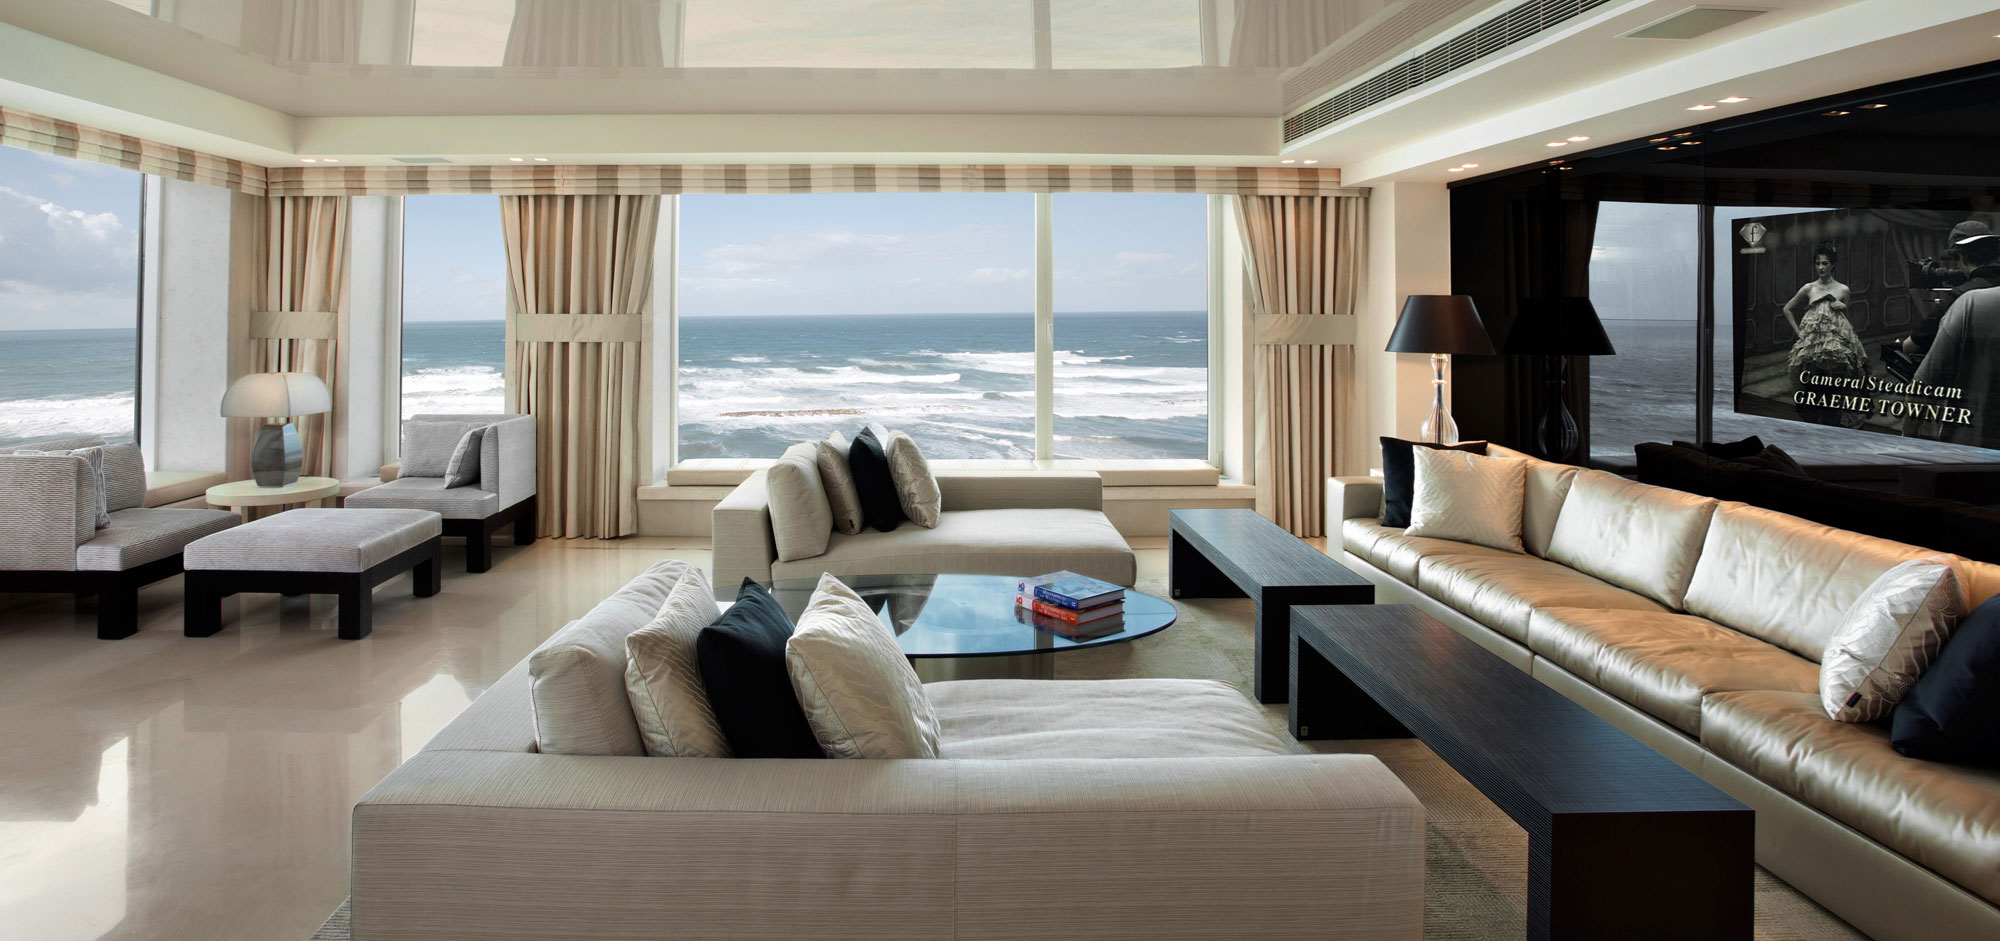 Luxury Apartment on the beach by Daniel Hasson | Homedezen